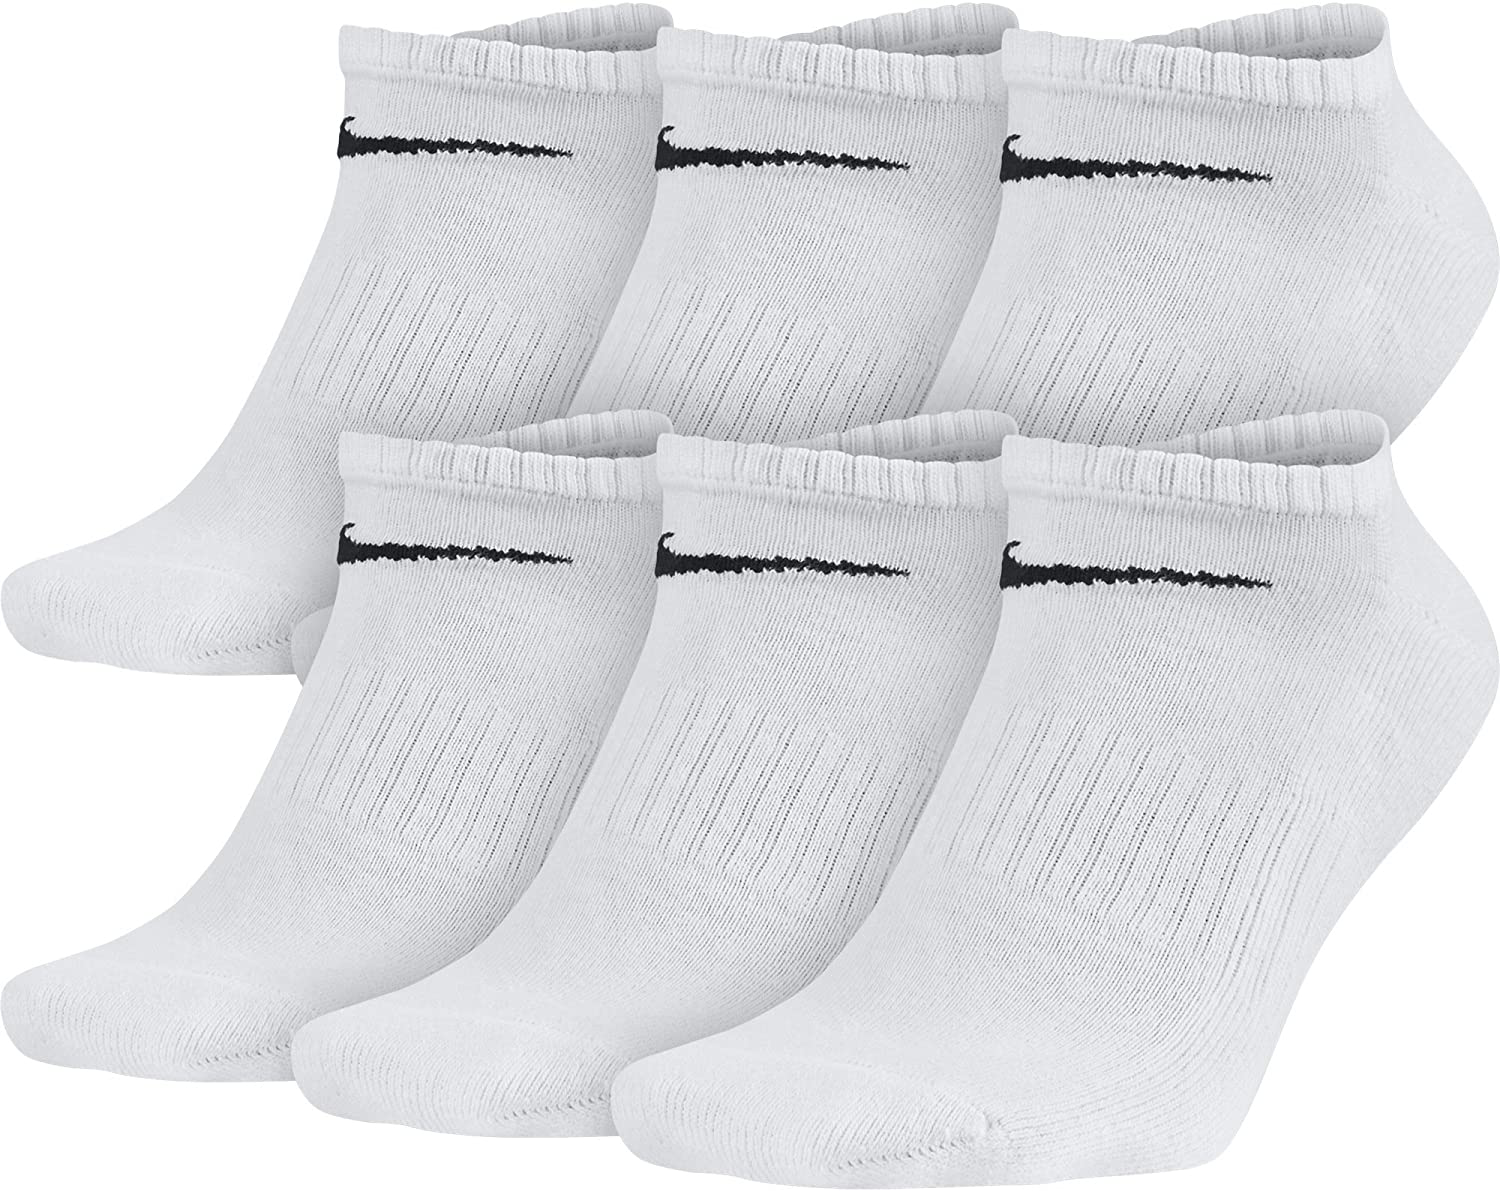 Nike Performance Cushion No-Show White/Black Socks with Band (6 Pairs)